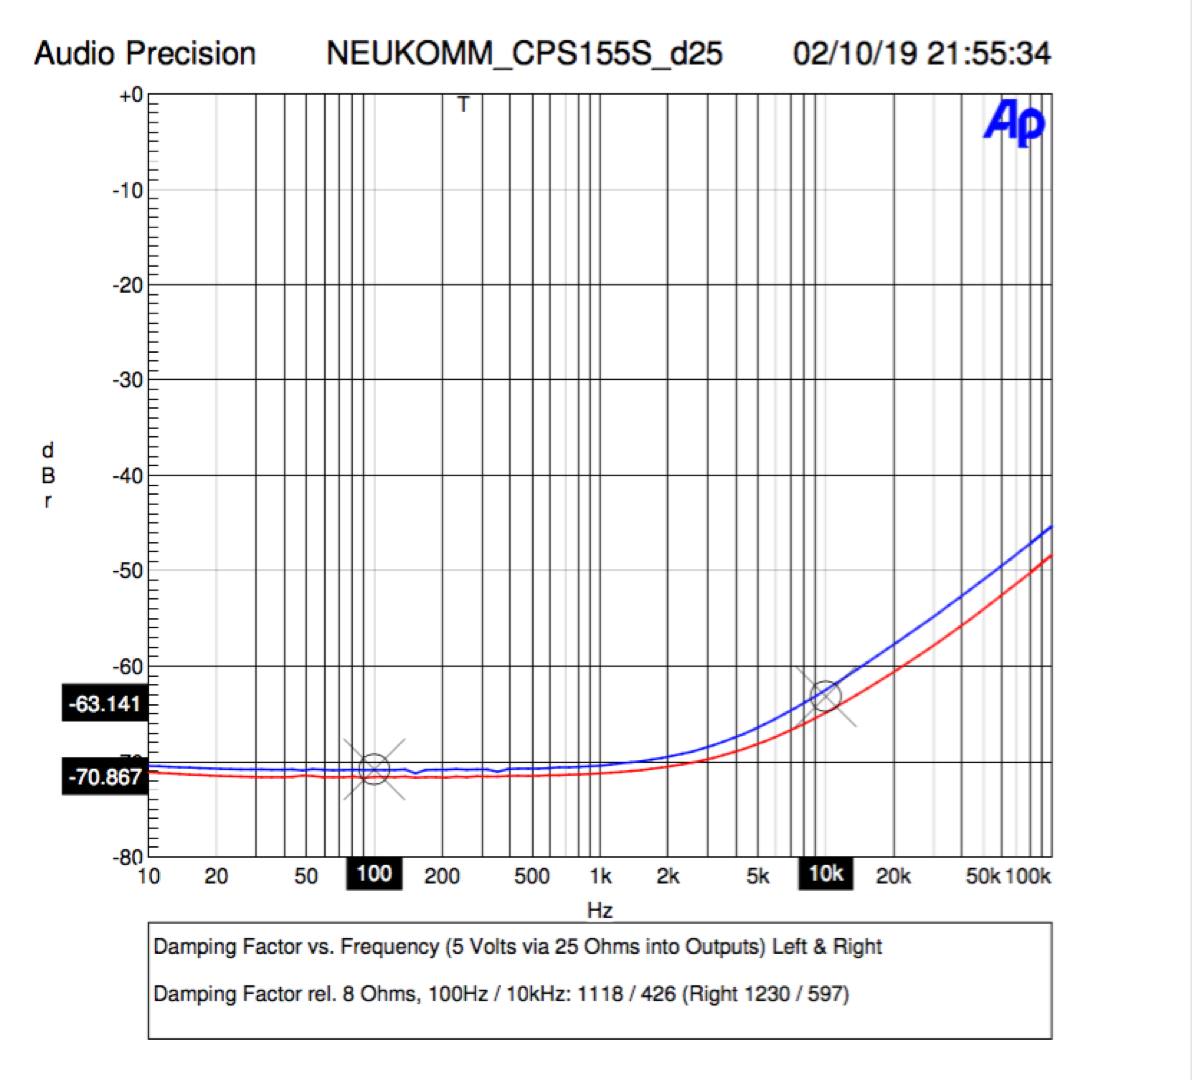 Neukomm CPA155S damping factor vs. frequency